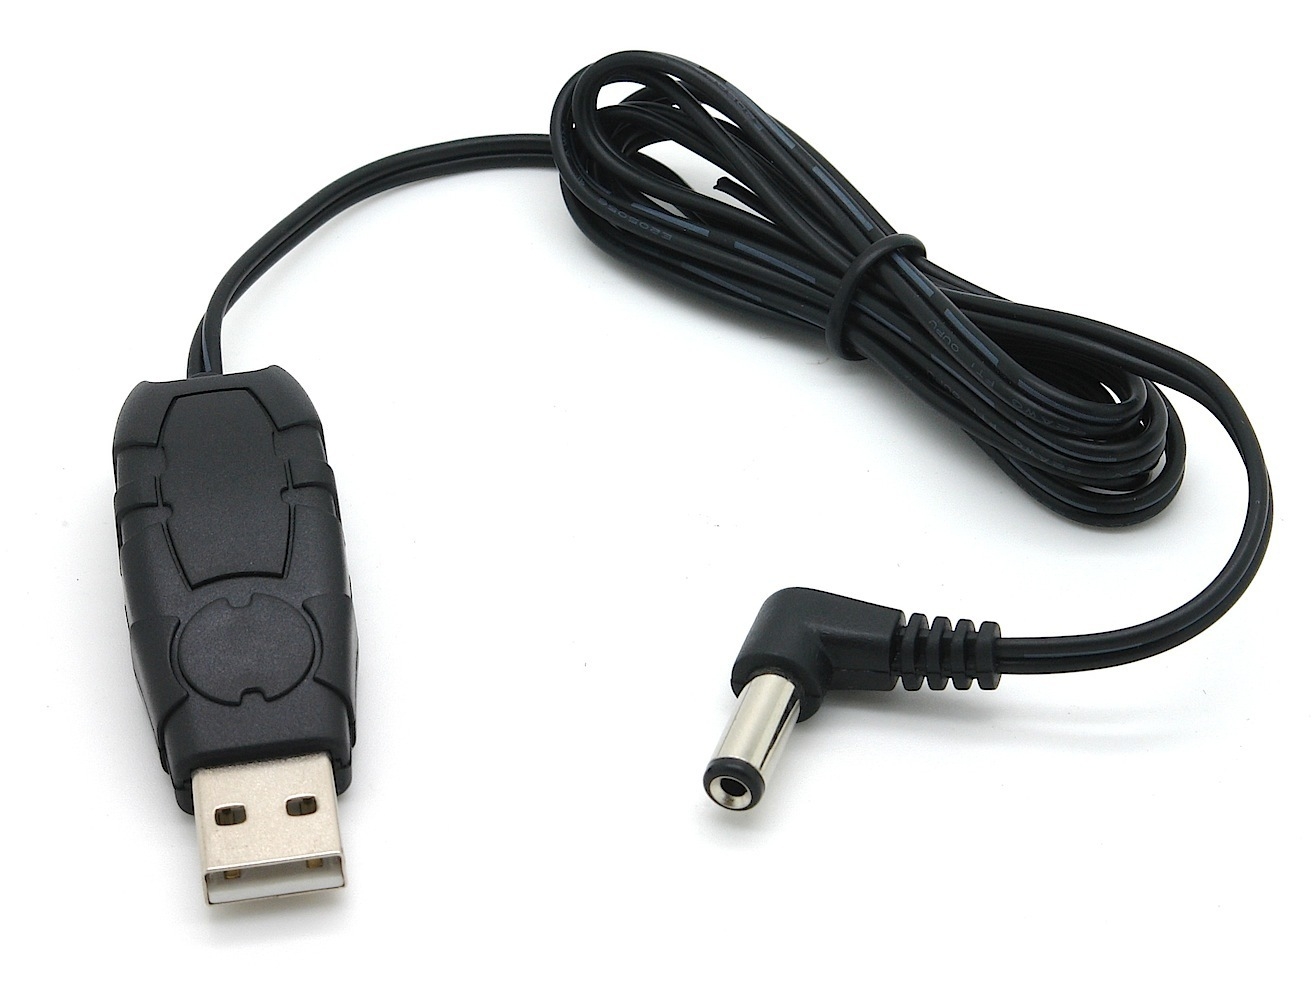 USB Spannungswandler 5V USB A kaufen bei BerryBase